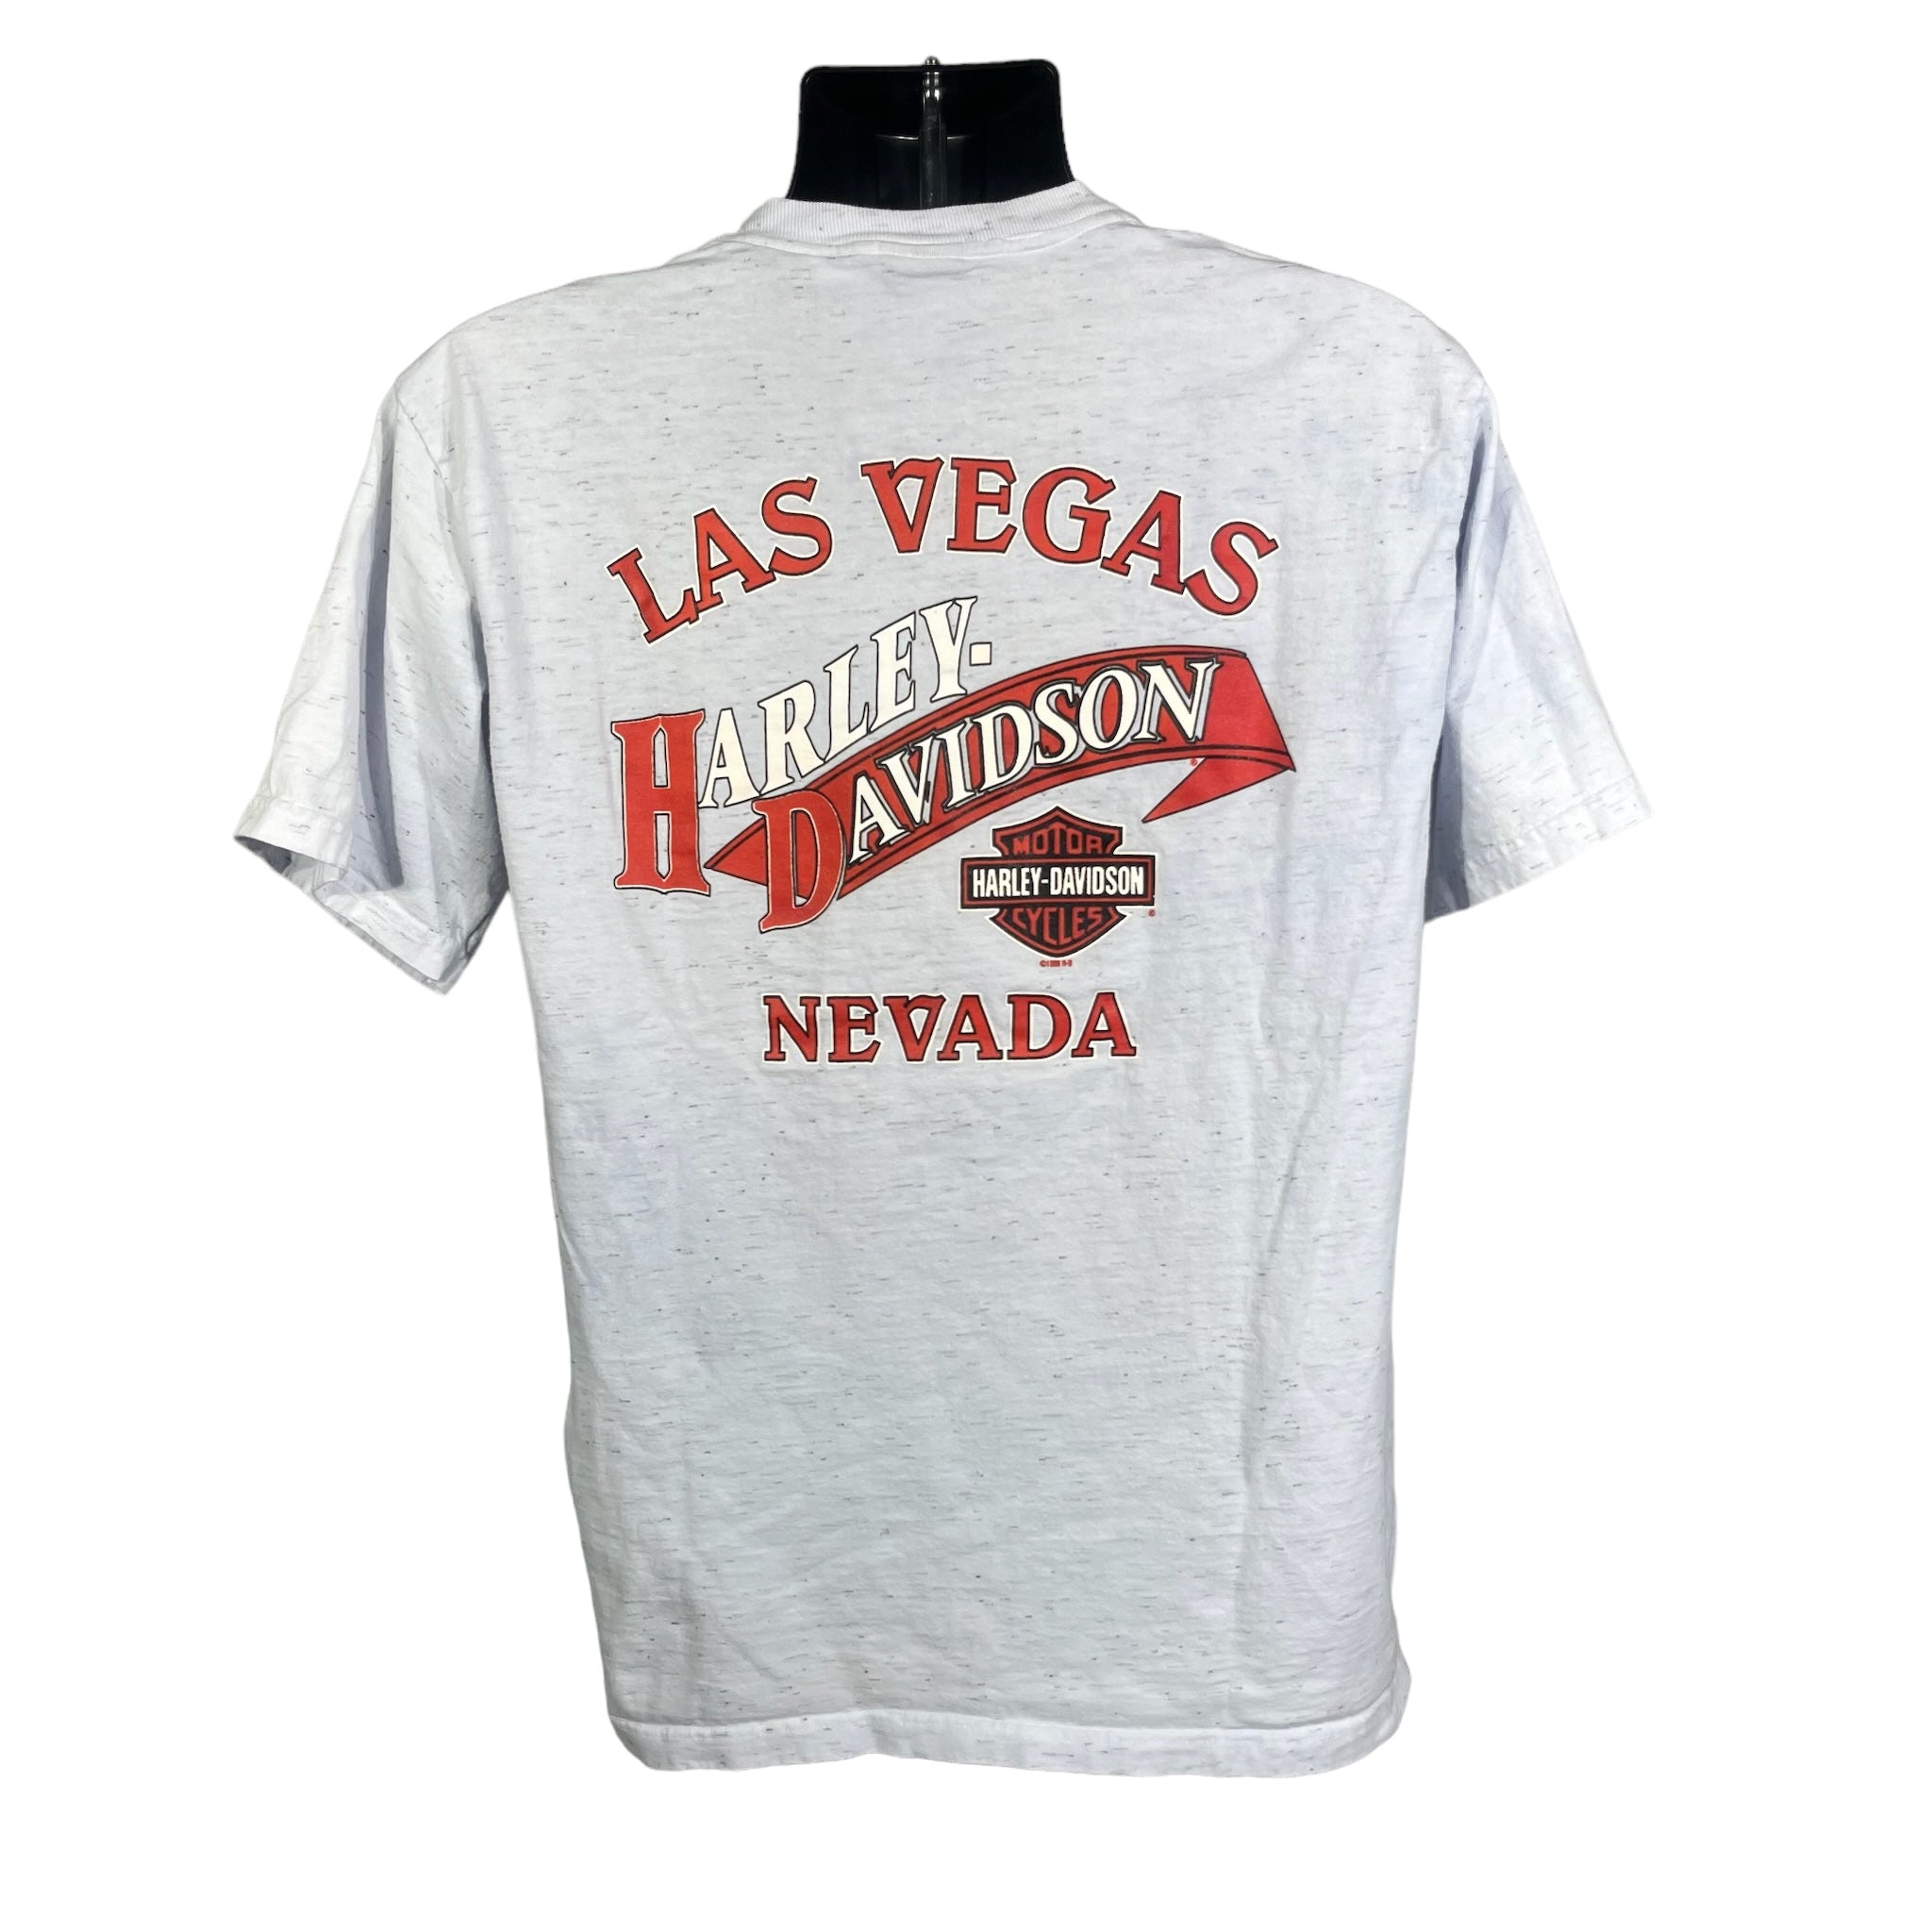 Vintage Harley Davidson Las Vegas Tee 1998